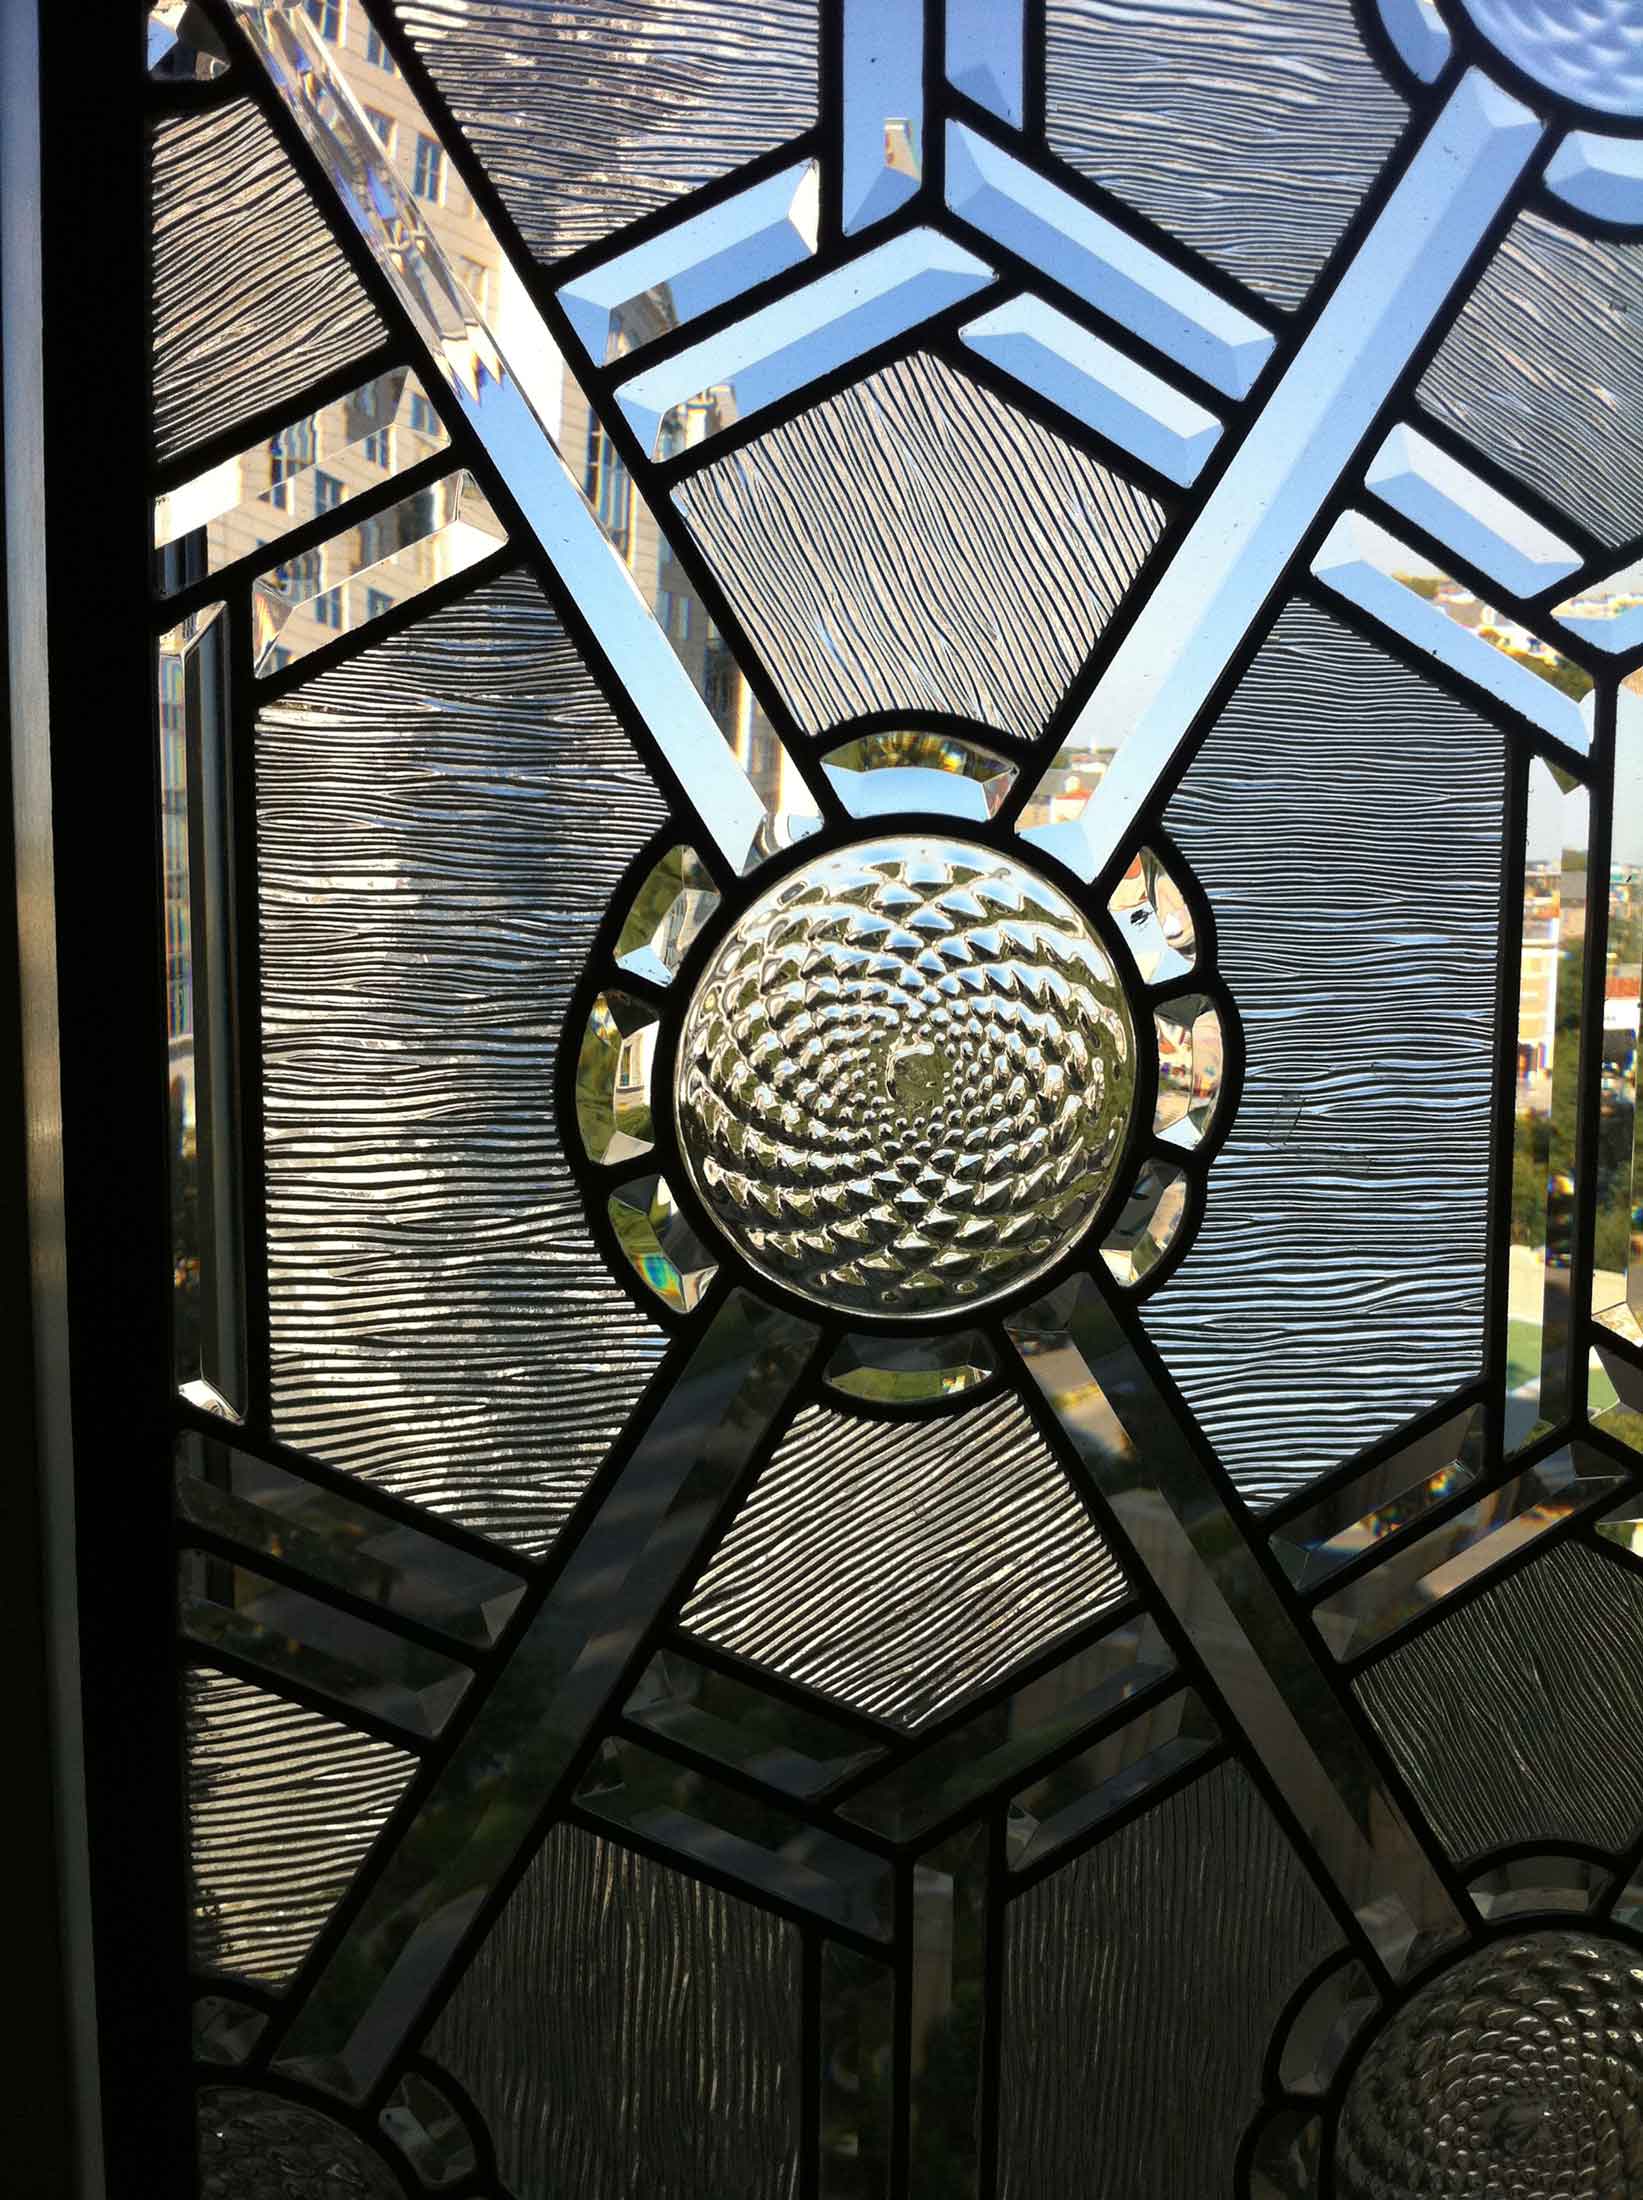 Custom cut art glass window design with geometric shapes